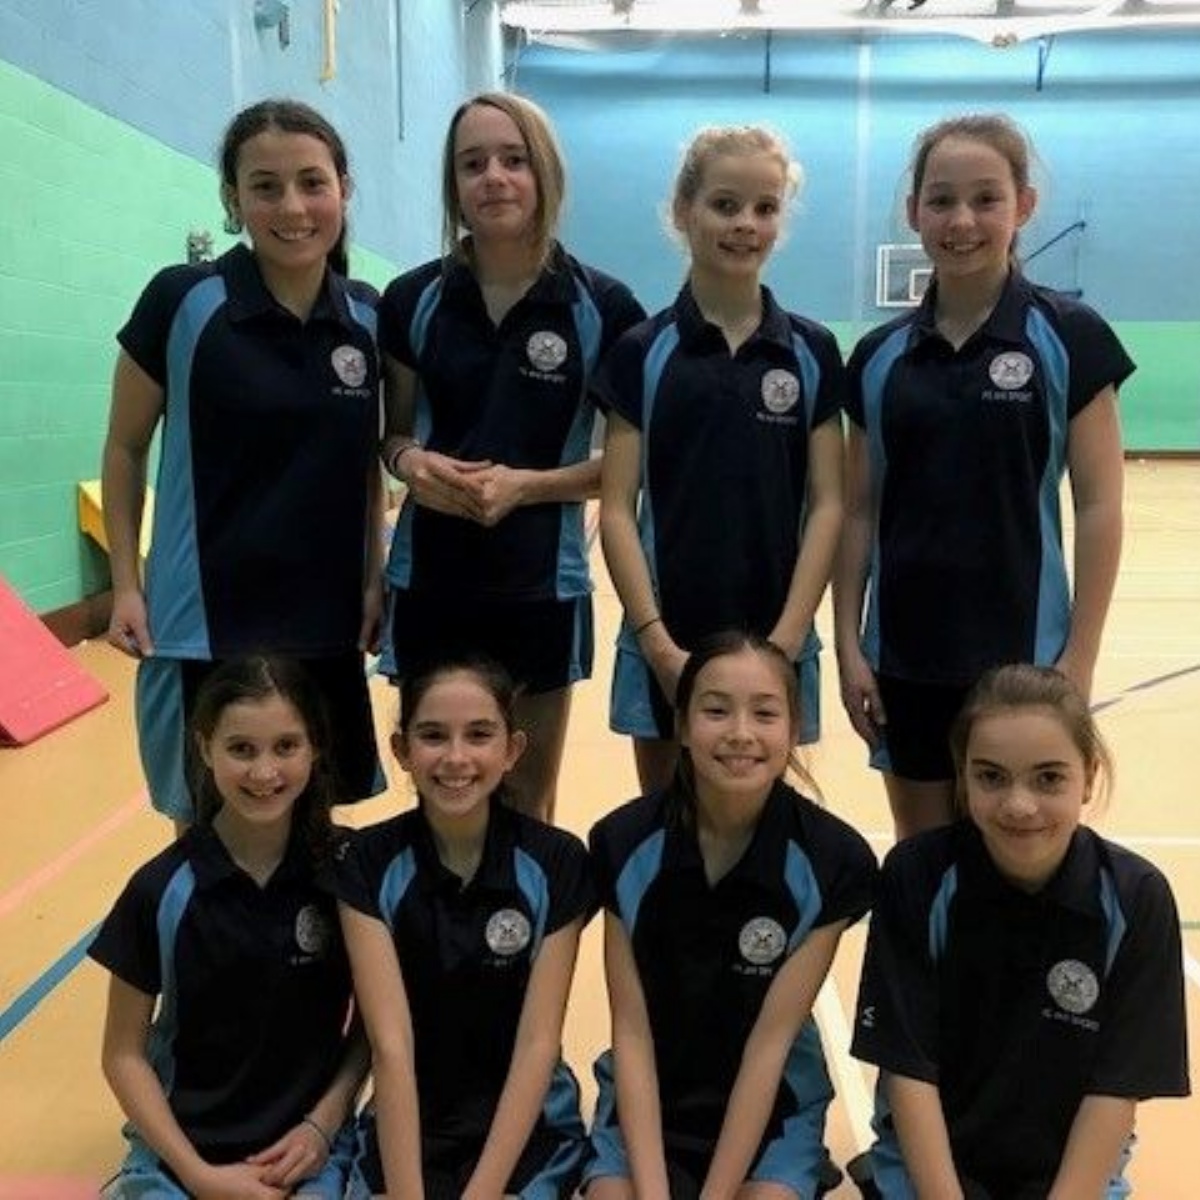 St Peter's Catholic School - Year 7 Girls Sportshall Athletics Champions!